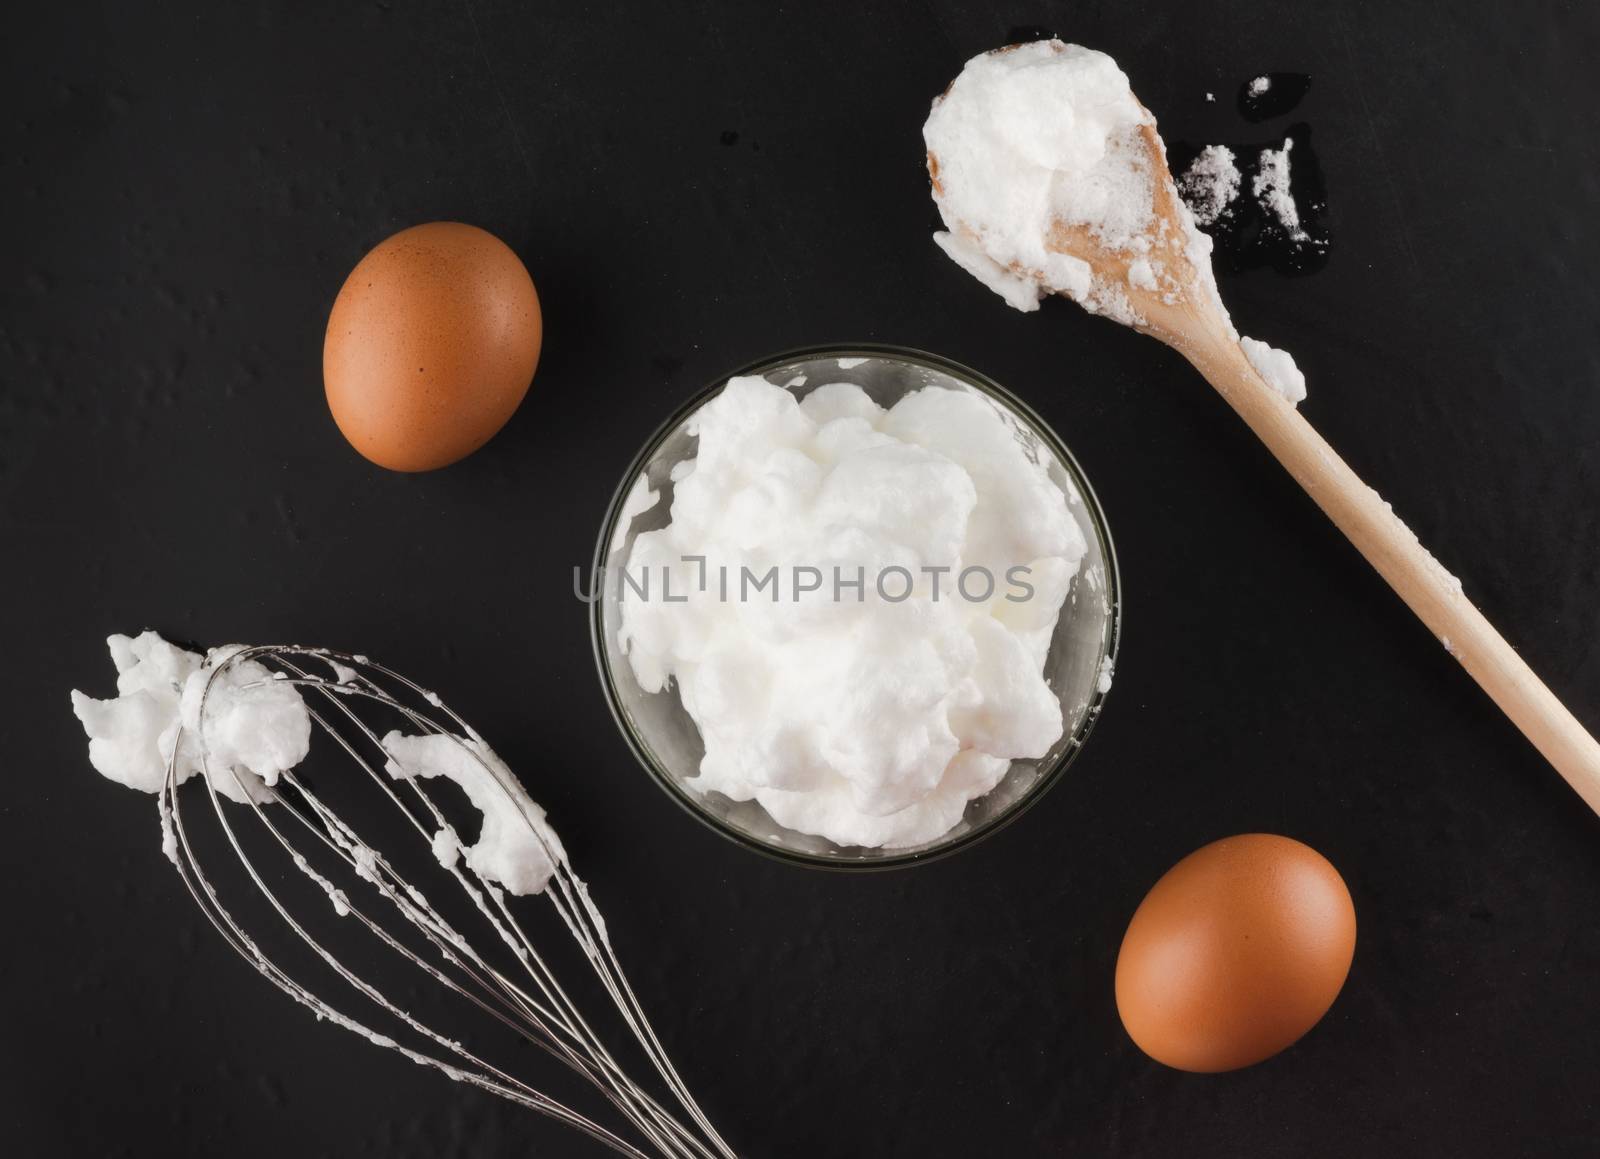 Whipped egg whites for cream by iprachenko